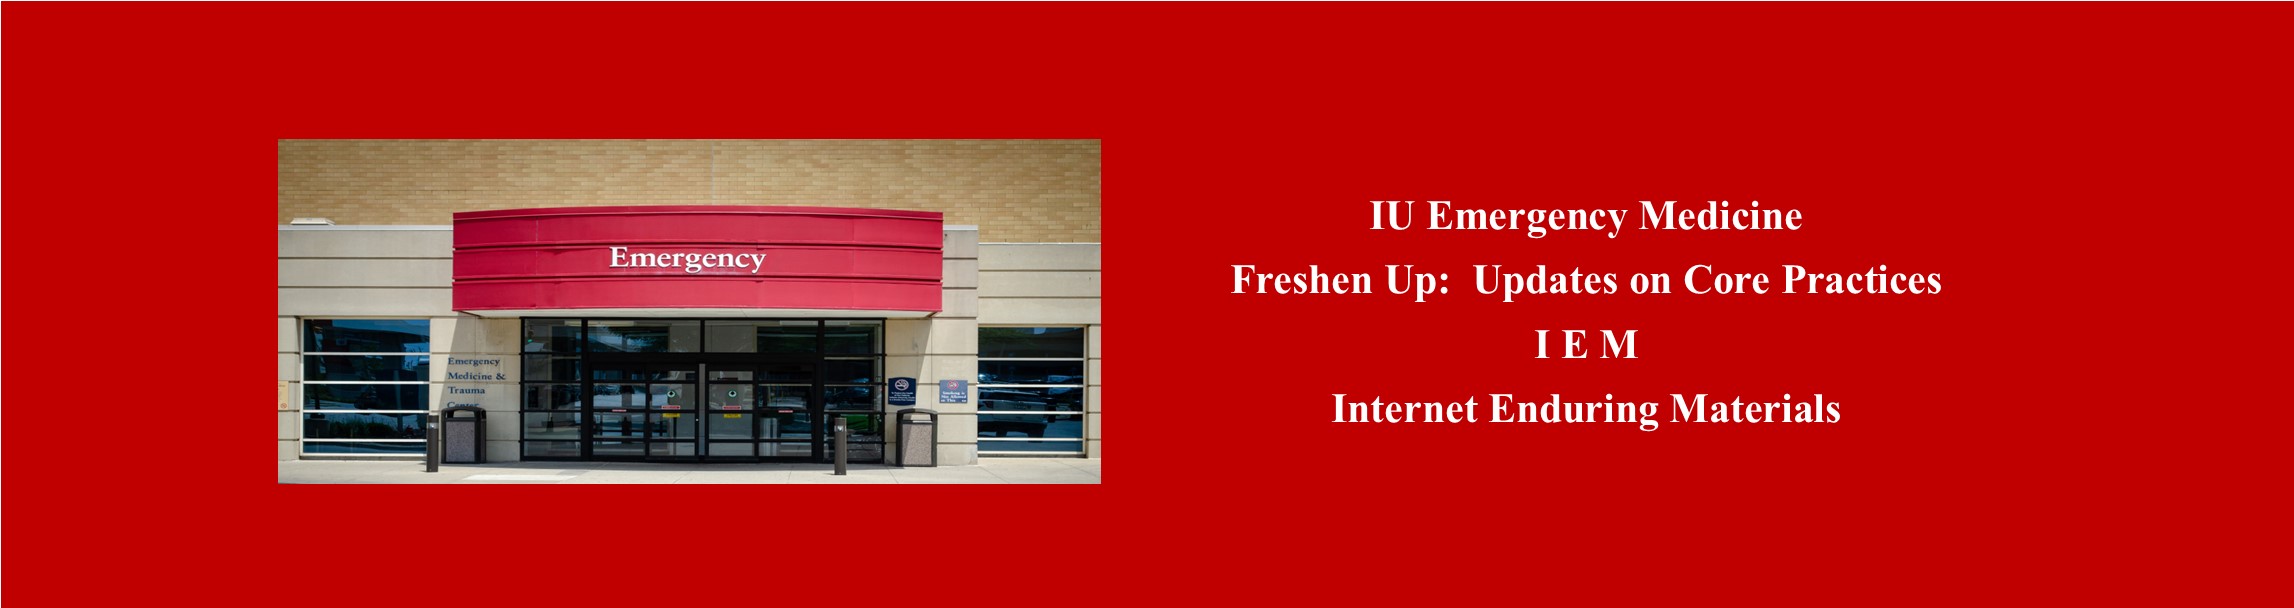 IU Emergency Medicine - Freshen Up:  Updates on Core Practices Banner